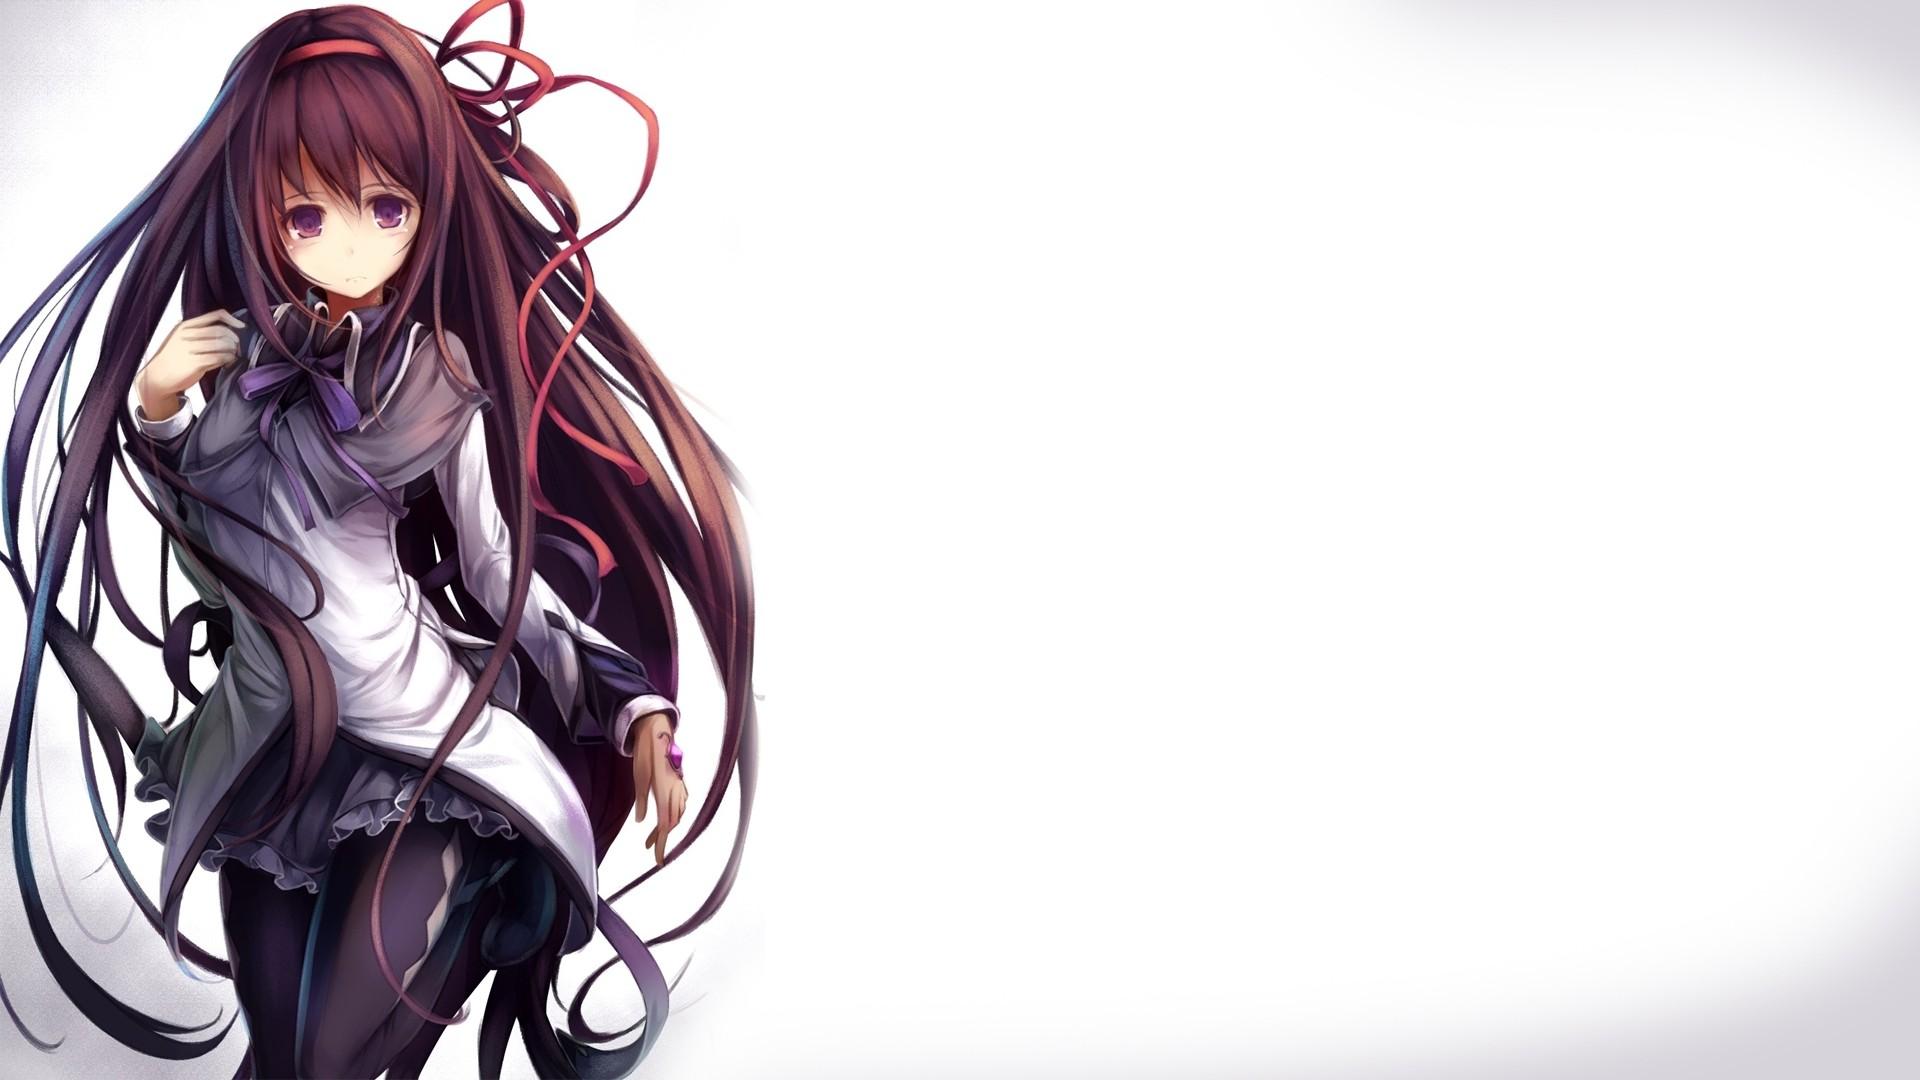 1080p Anime Girl Wallpaper Amazing Cool Download Best Windows